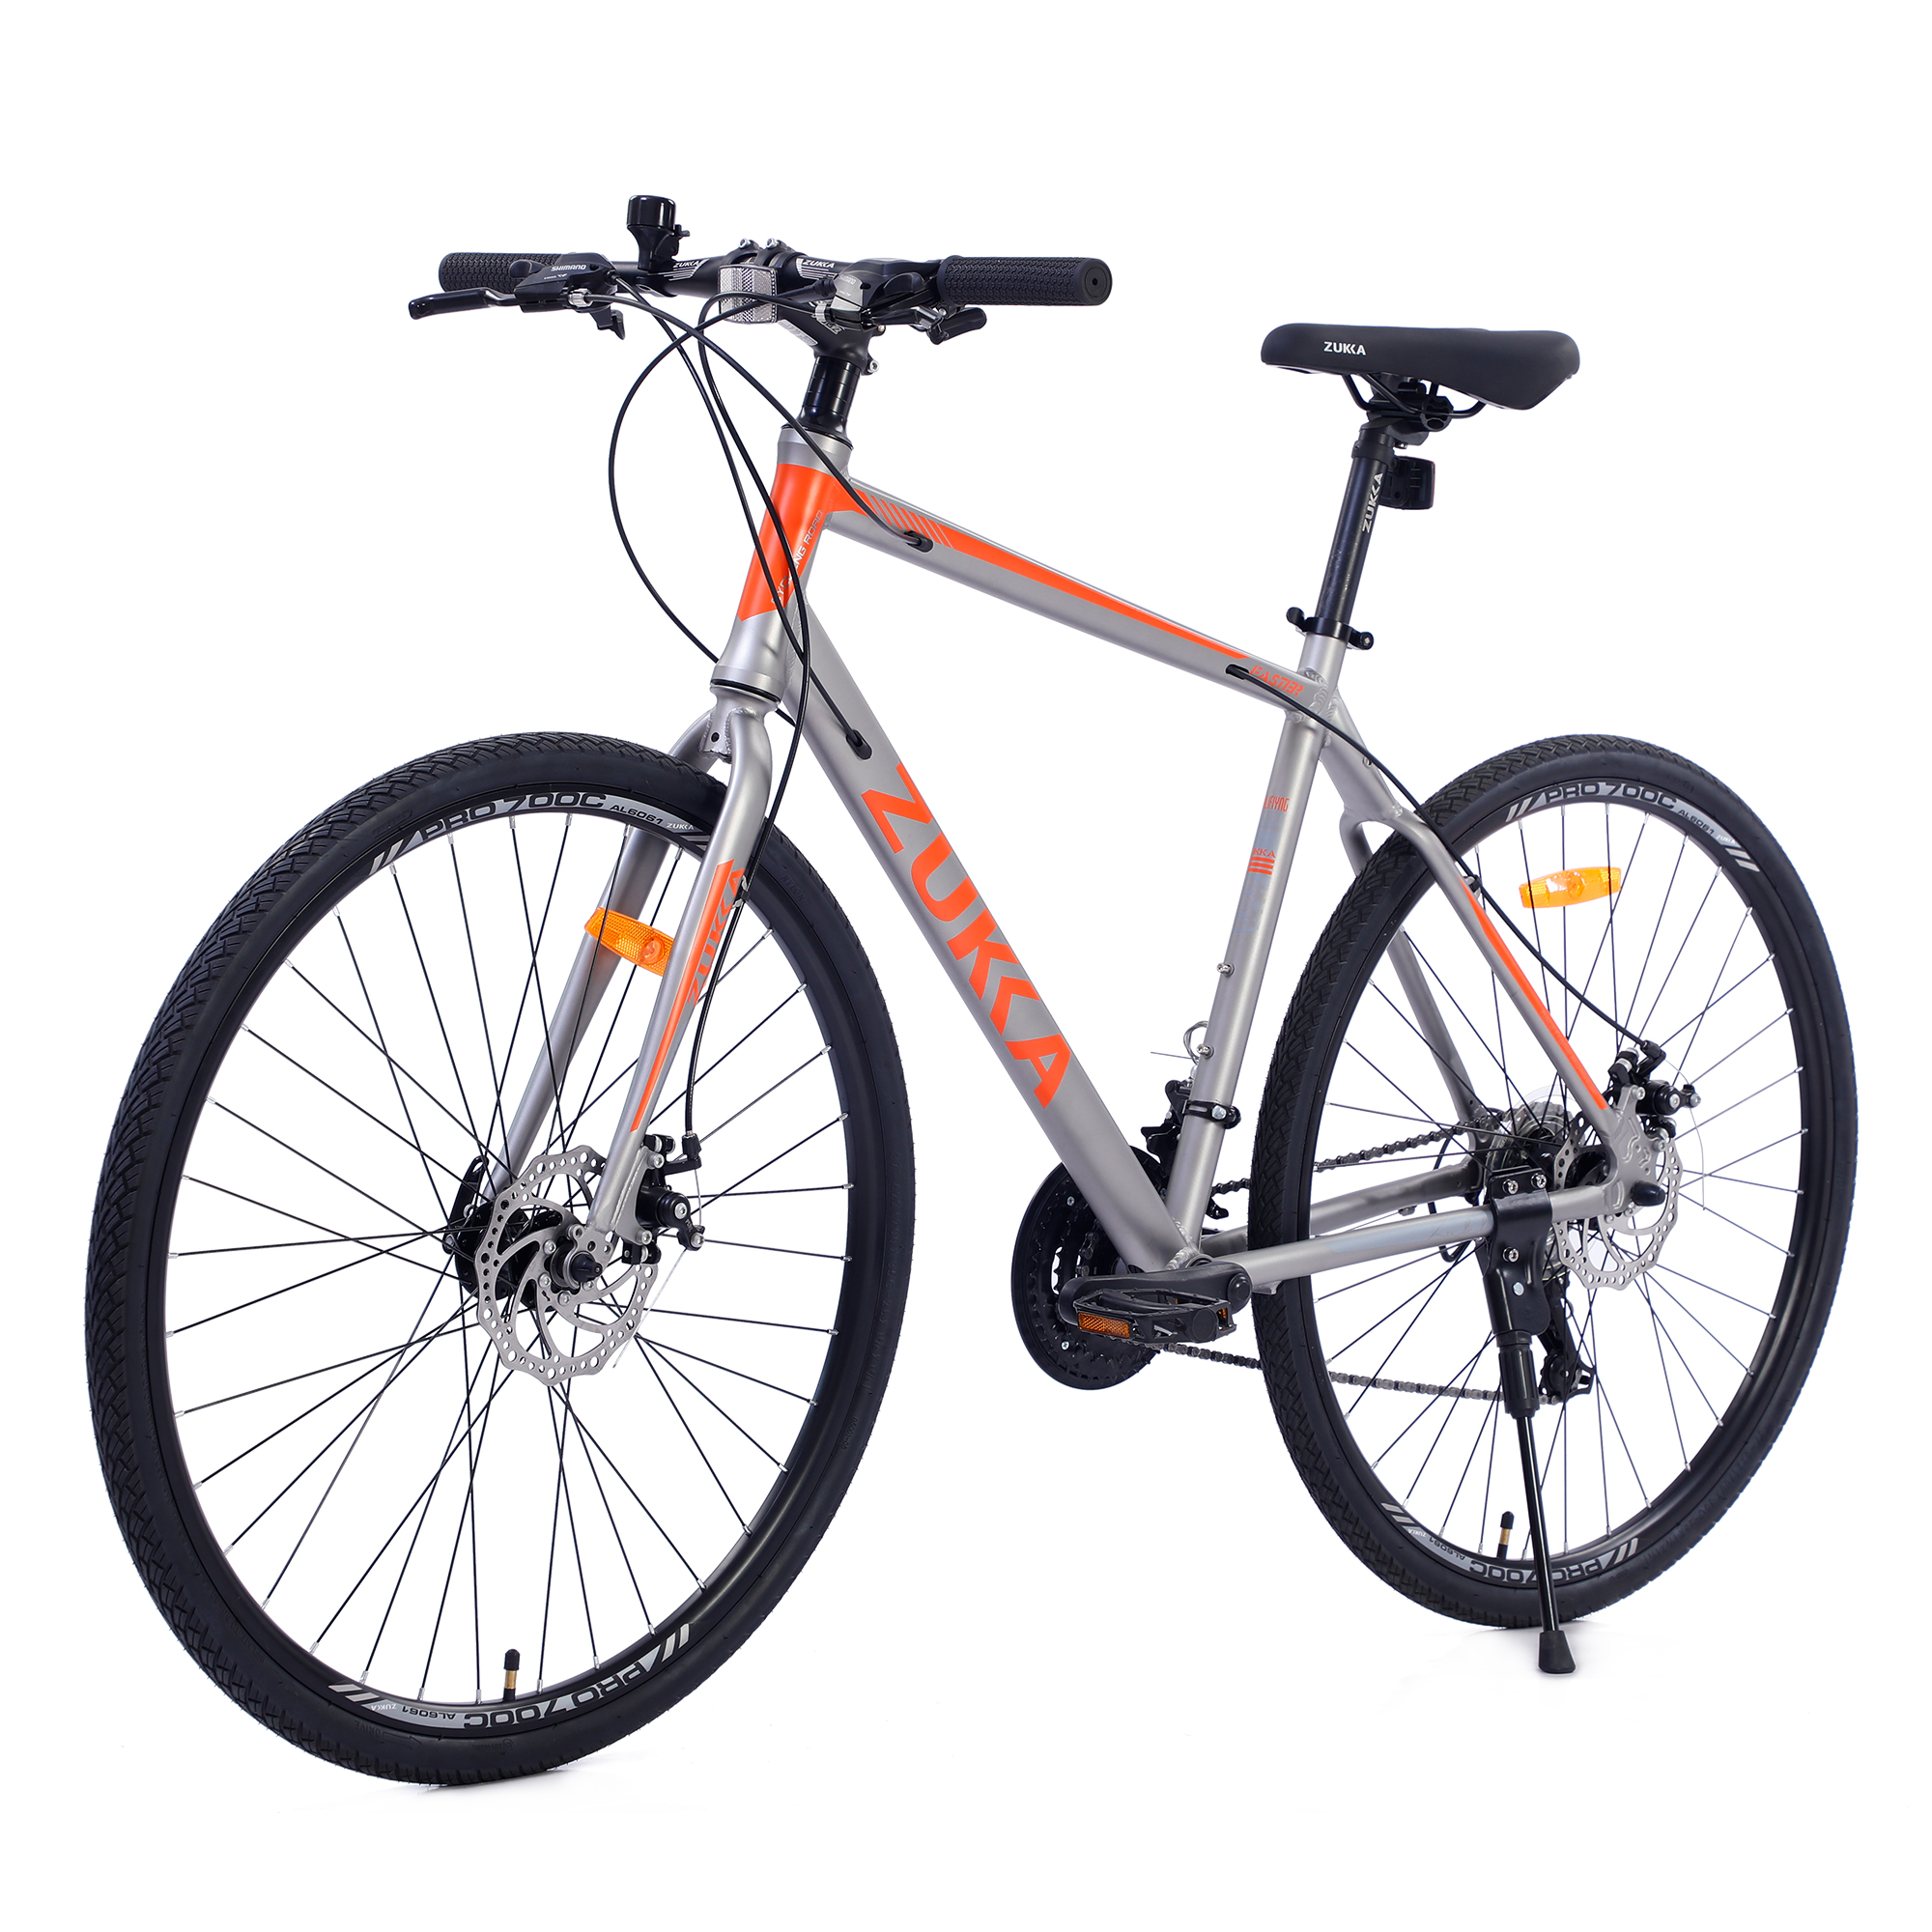 Segmart 21-Speed Mountain Bike, 28-inch Wheels Lightweight Road Bike, Hybrid Aluminum Frame and Upgrade Dual Disc Brake MTB for Men Women Adult, Silver, SS2065 - image 1 of 8